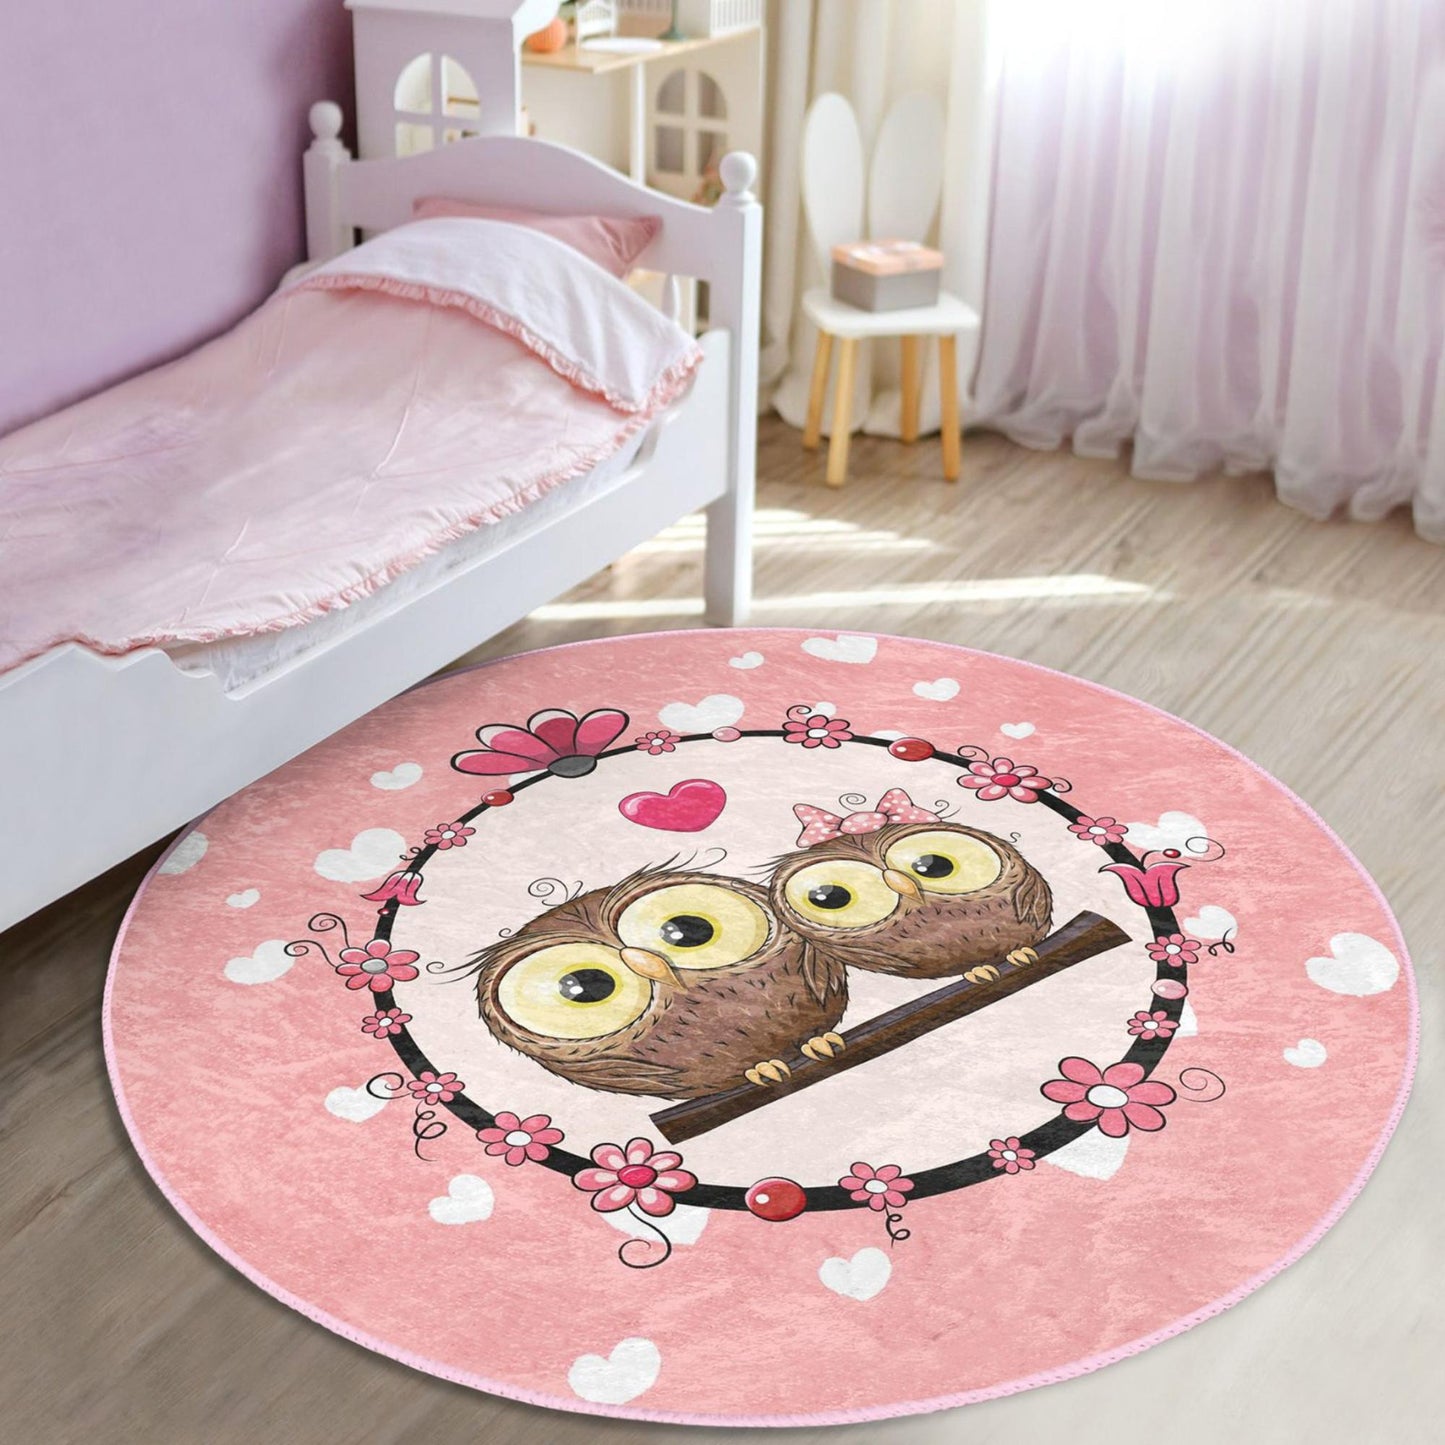 Charming kids rug adorned with sweet pink owl loves design.